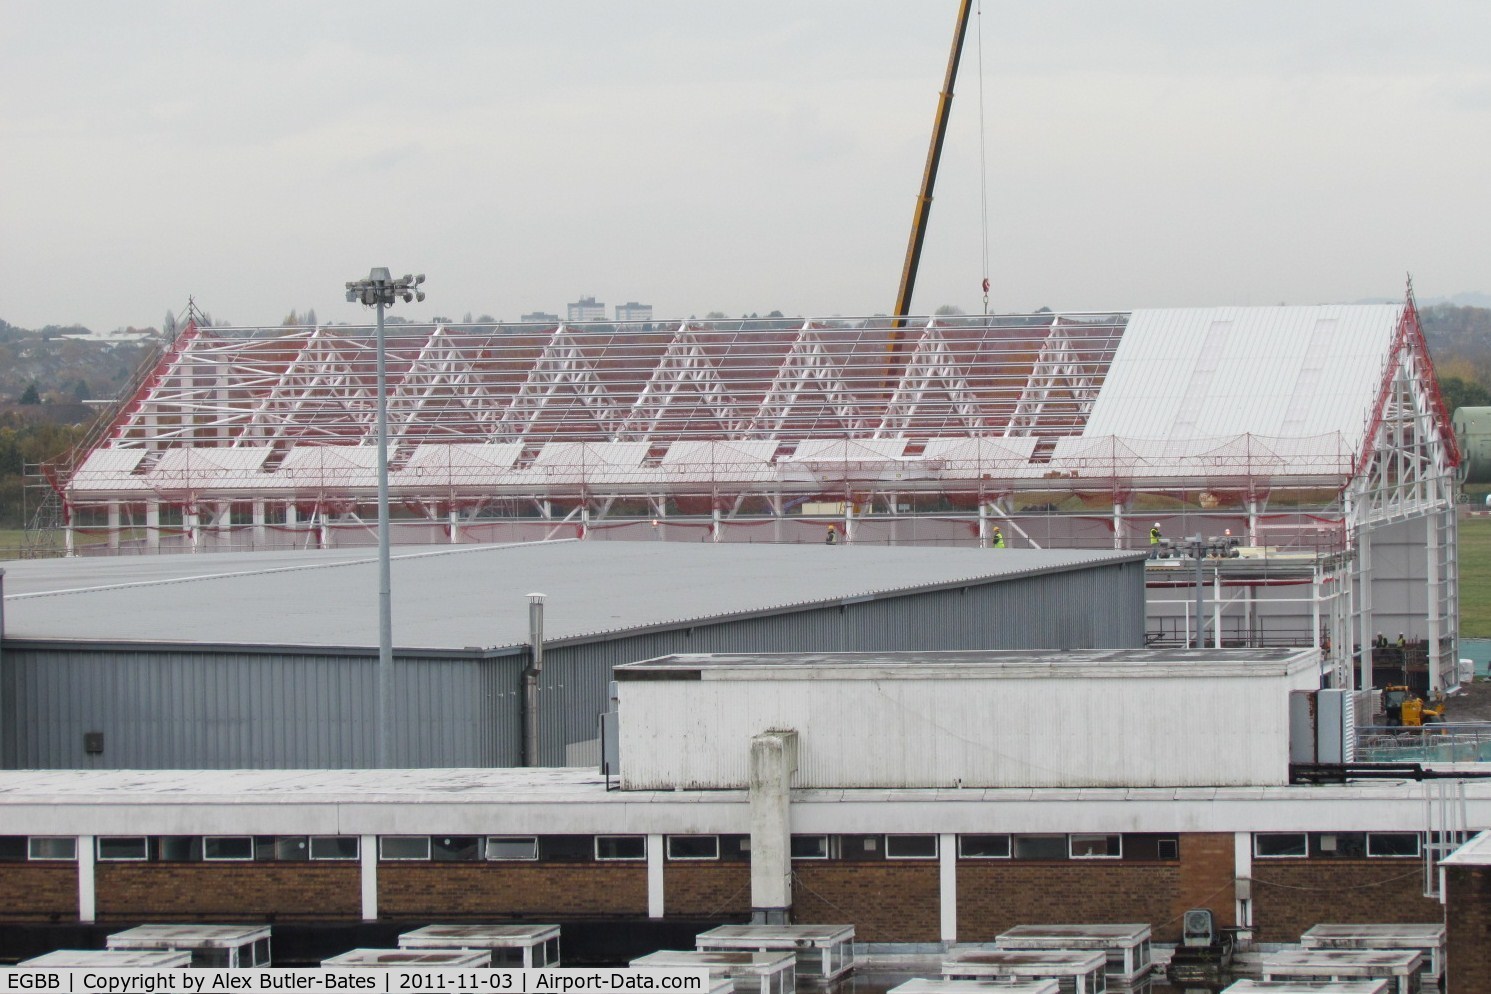 Birmingham International Airport, Birmingham, England United Kingdom (EGBB) - The new Eurojet hanger under construction